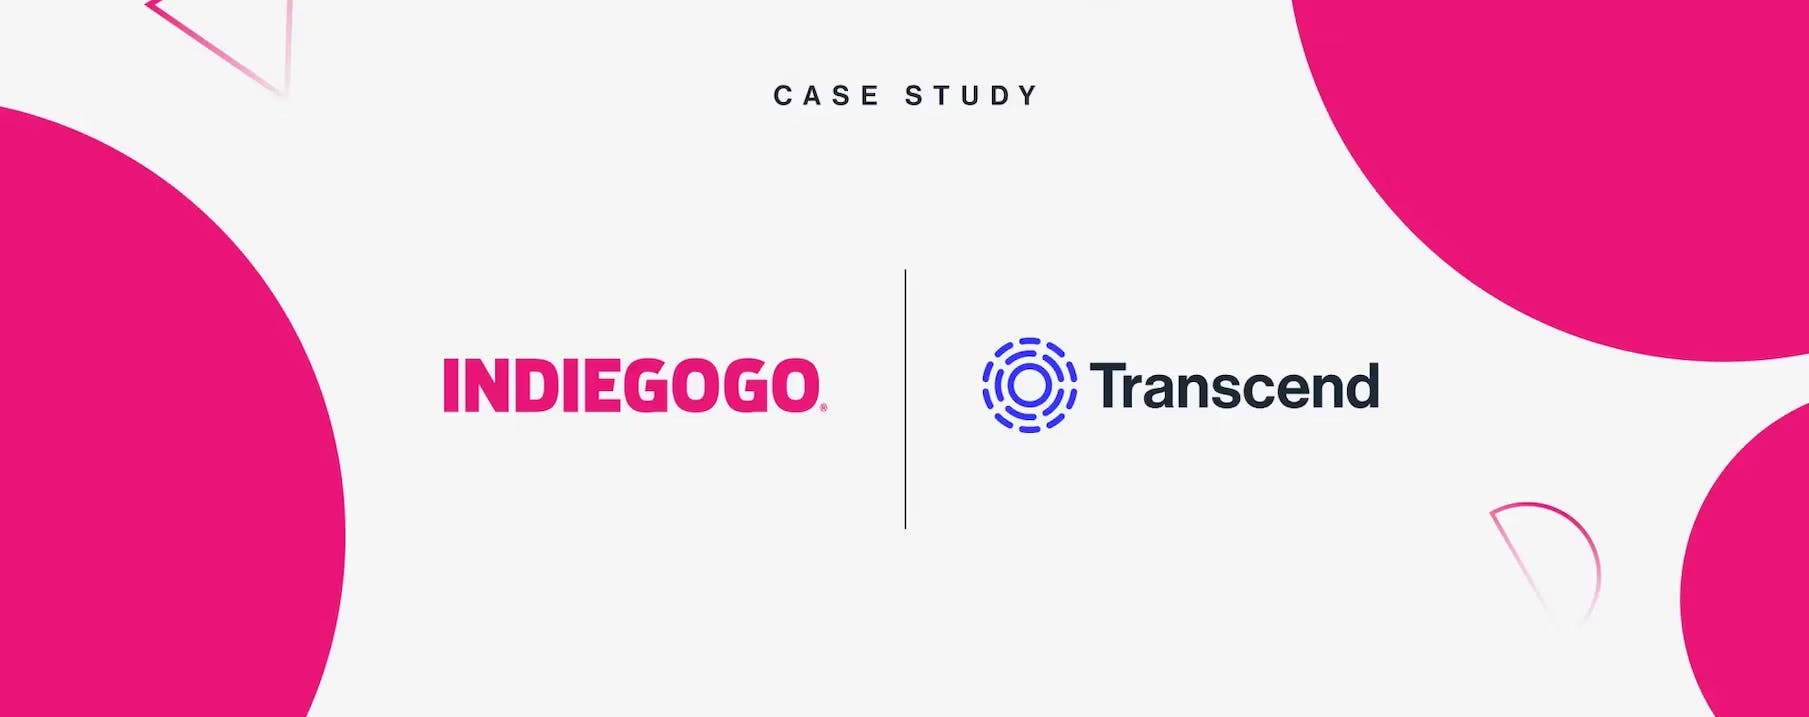 Indiegogo transcend case study